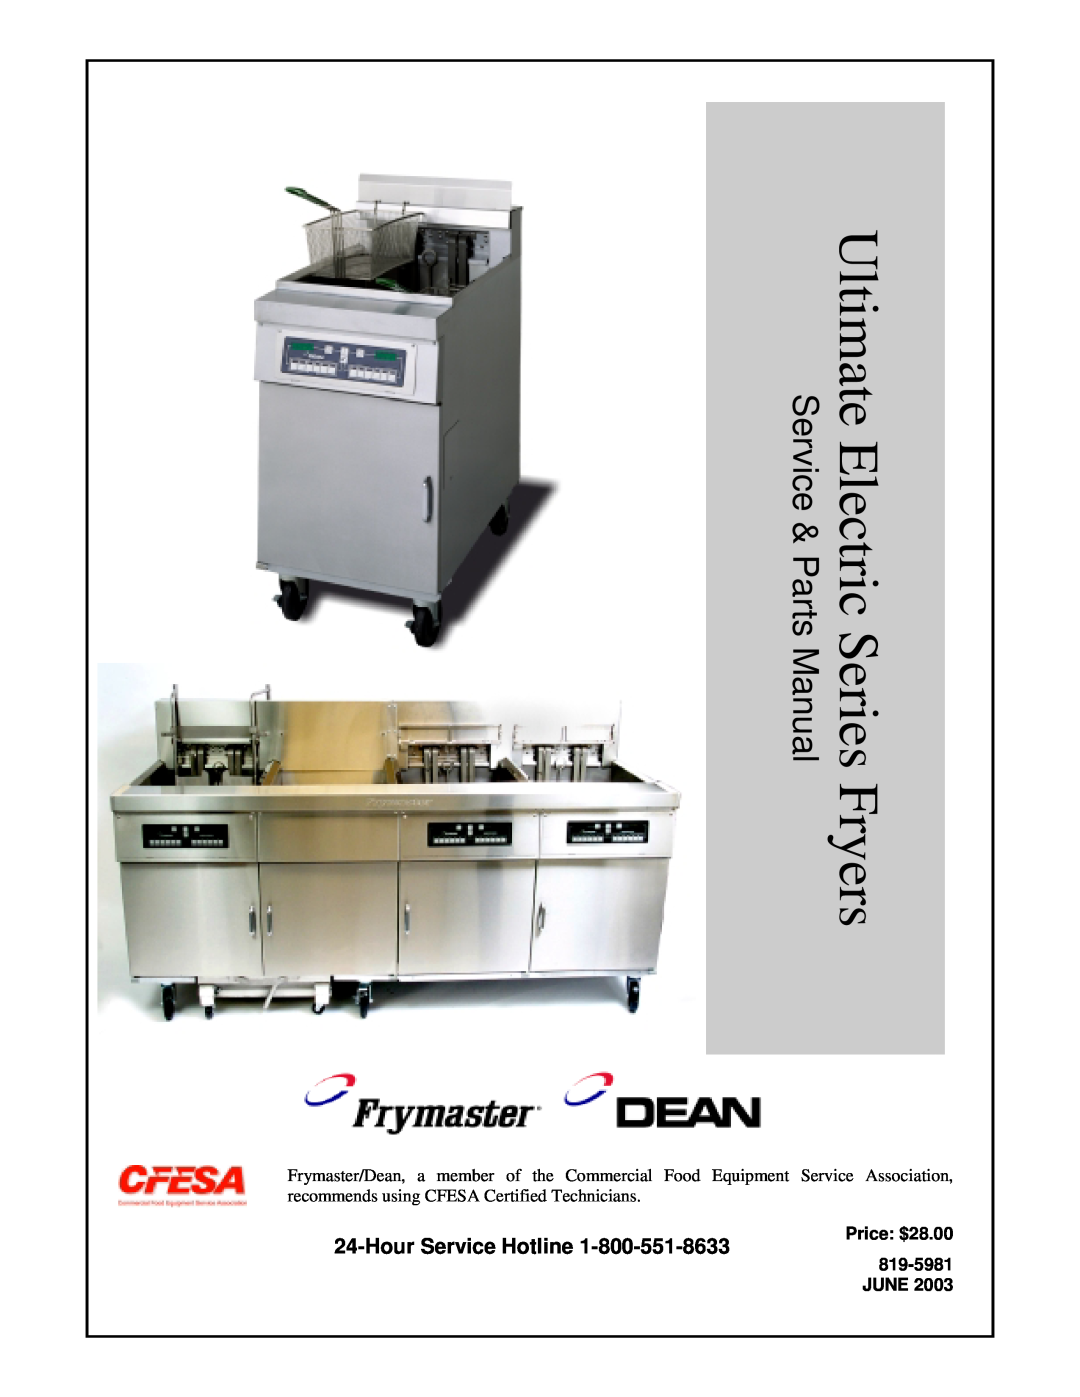 Frymaster manual HourService Hotline, Price $28.00 819-5981JUNE, Ultimate Electric Series Fryers 